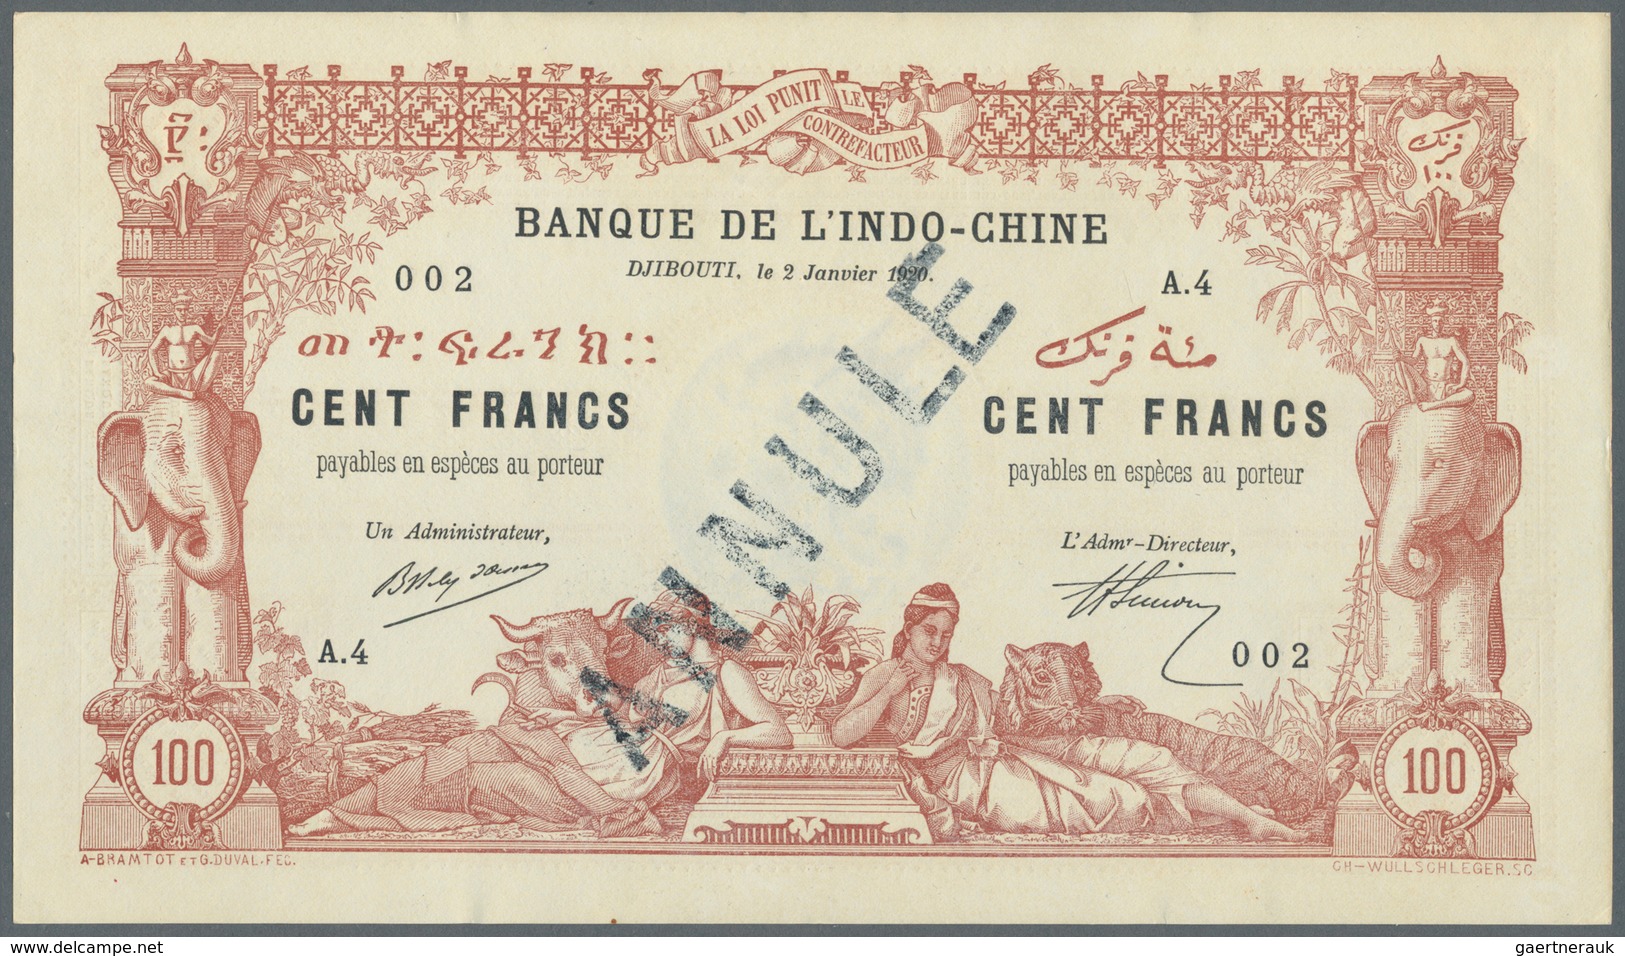 Djibouti / Dschibuti: 100 Francs 1920 Banque De L'Indochine With Stamp "Annule" P. 5(s), Highly Rare - Djibouti